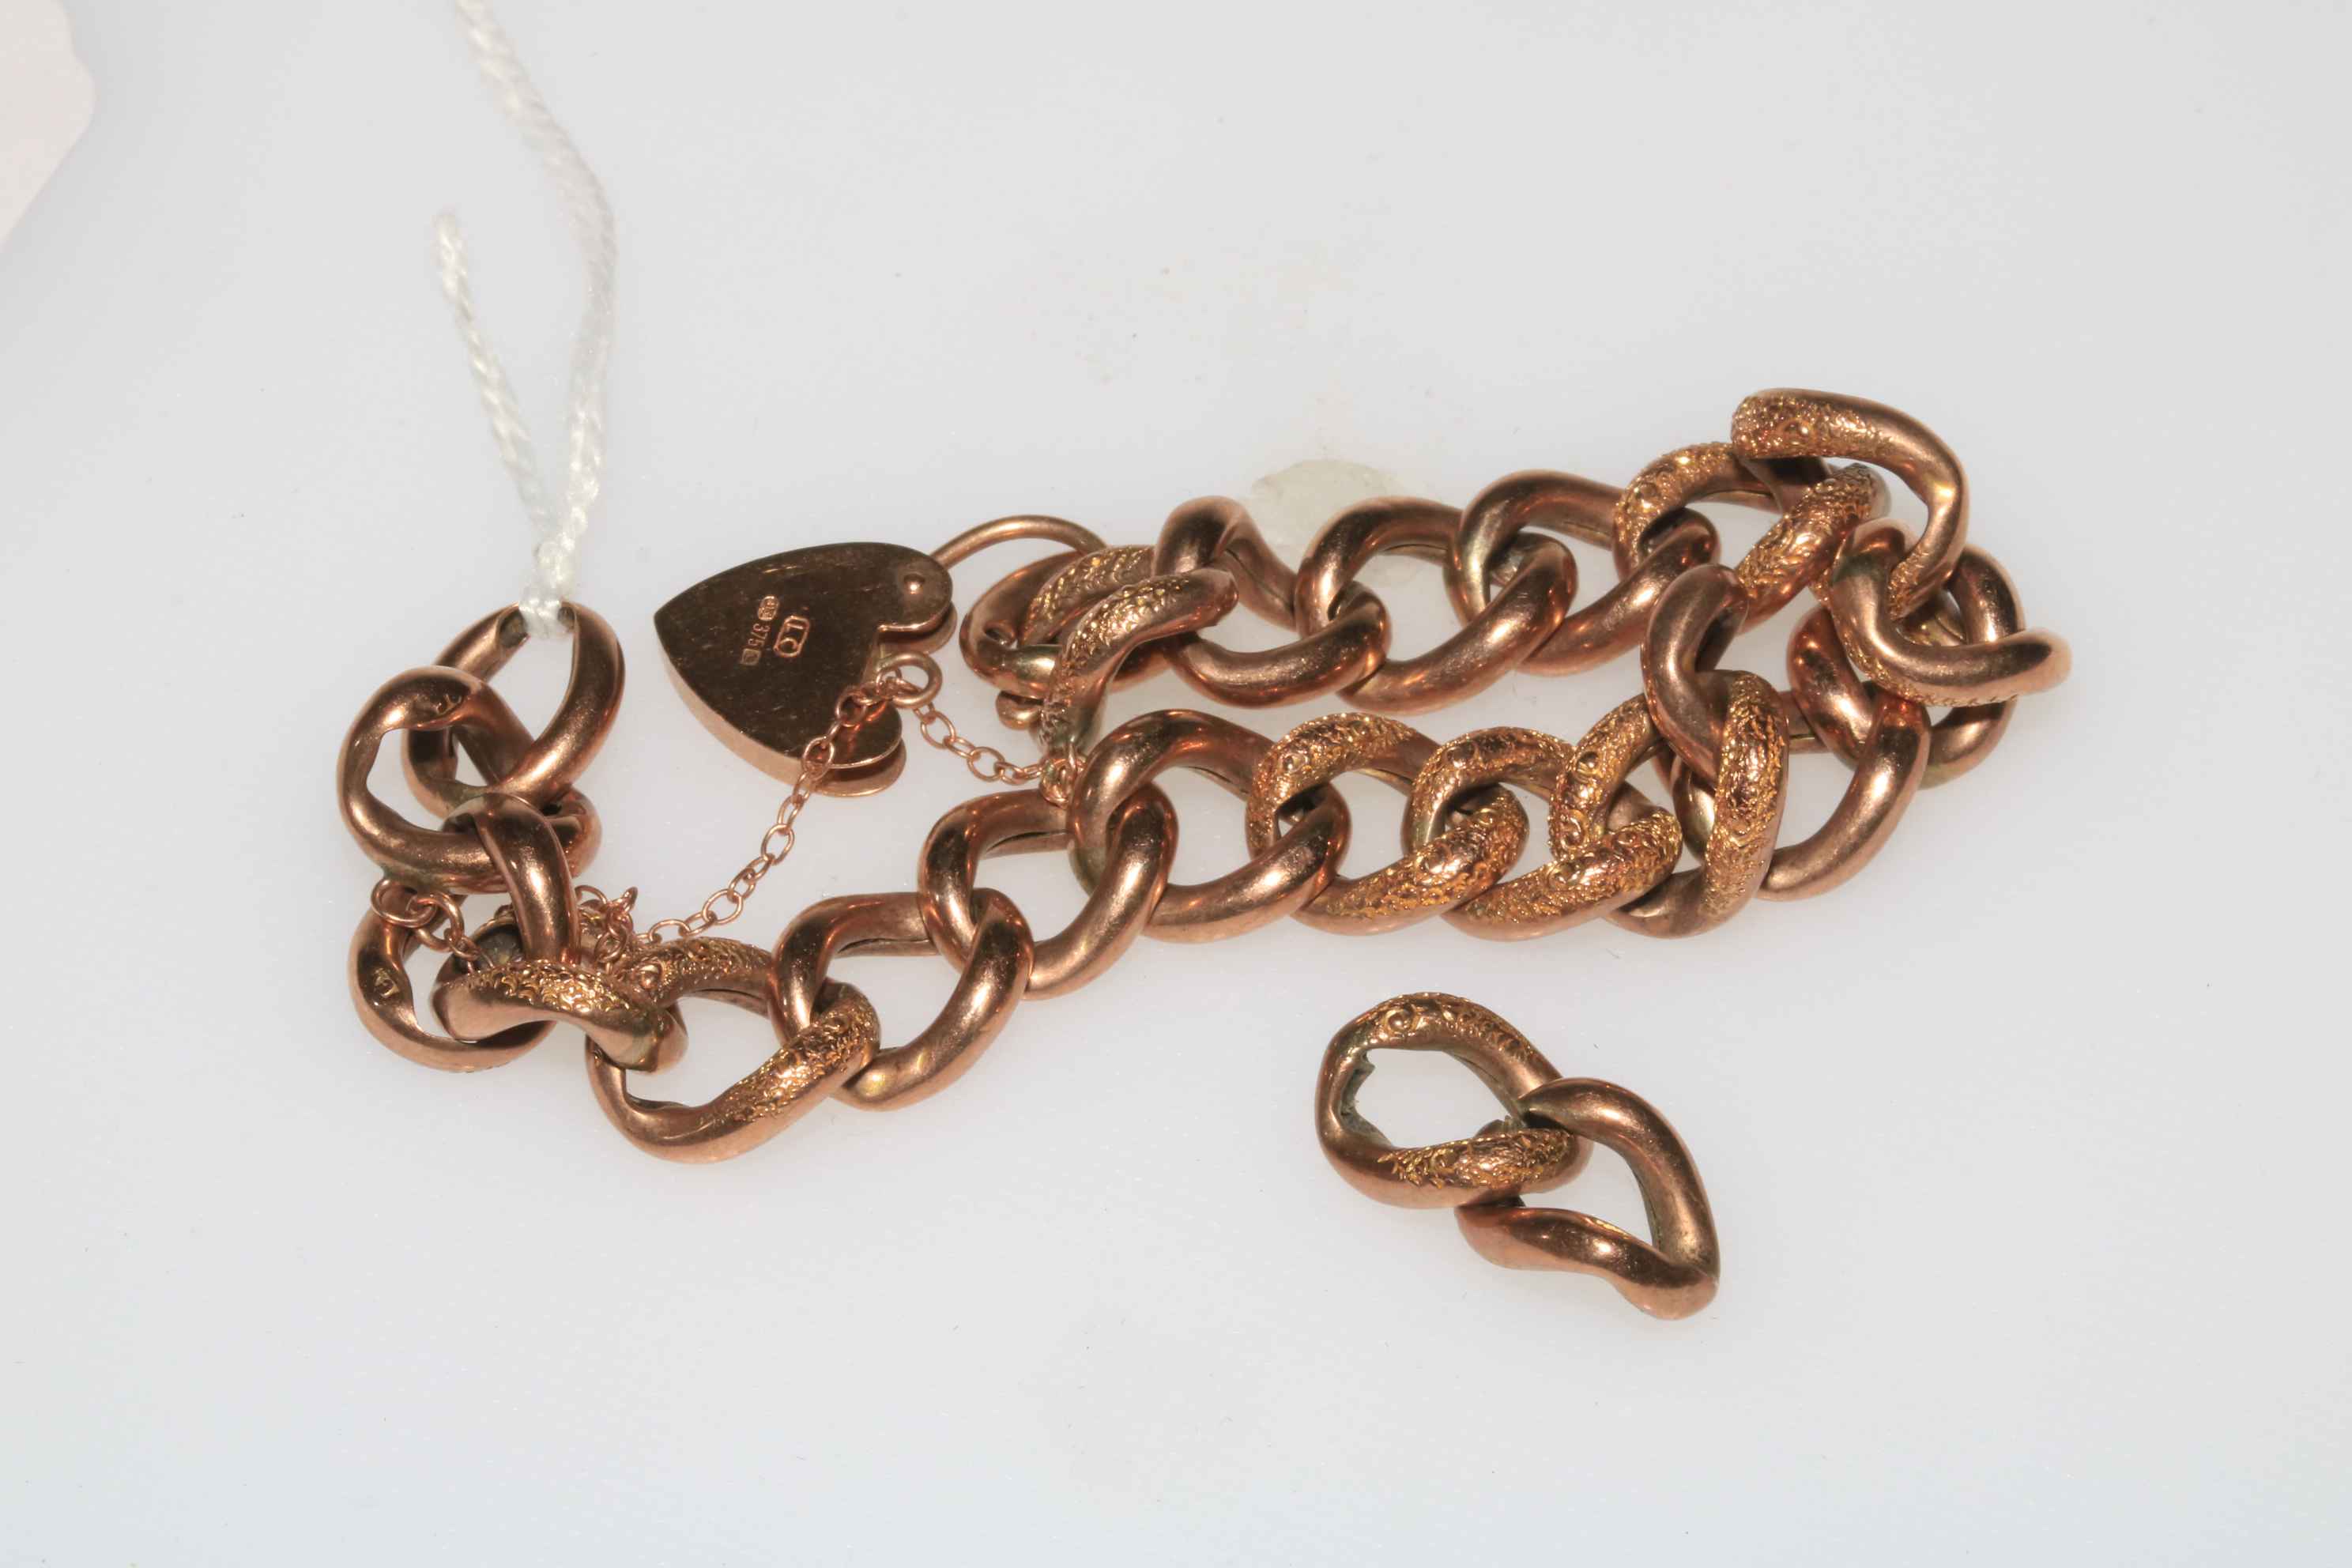 9 carat gold chain link bracelet with padlock fastening.